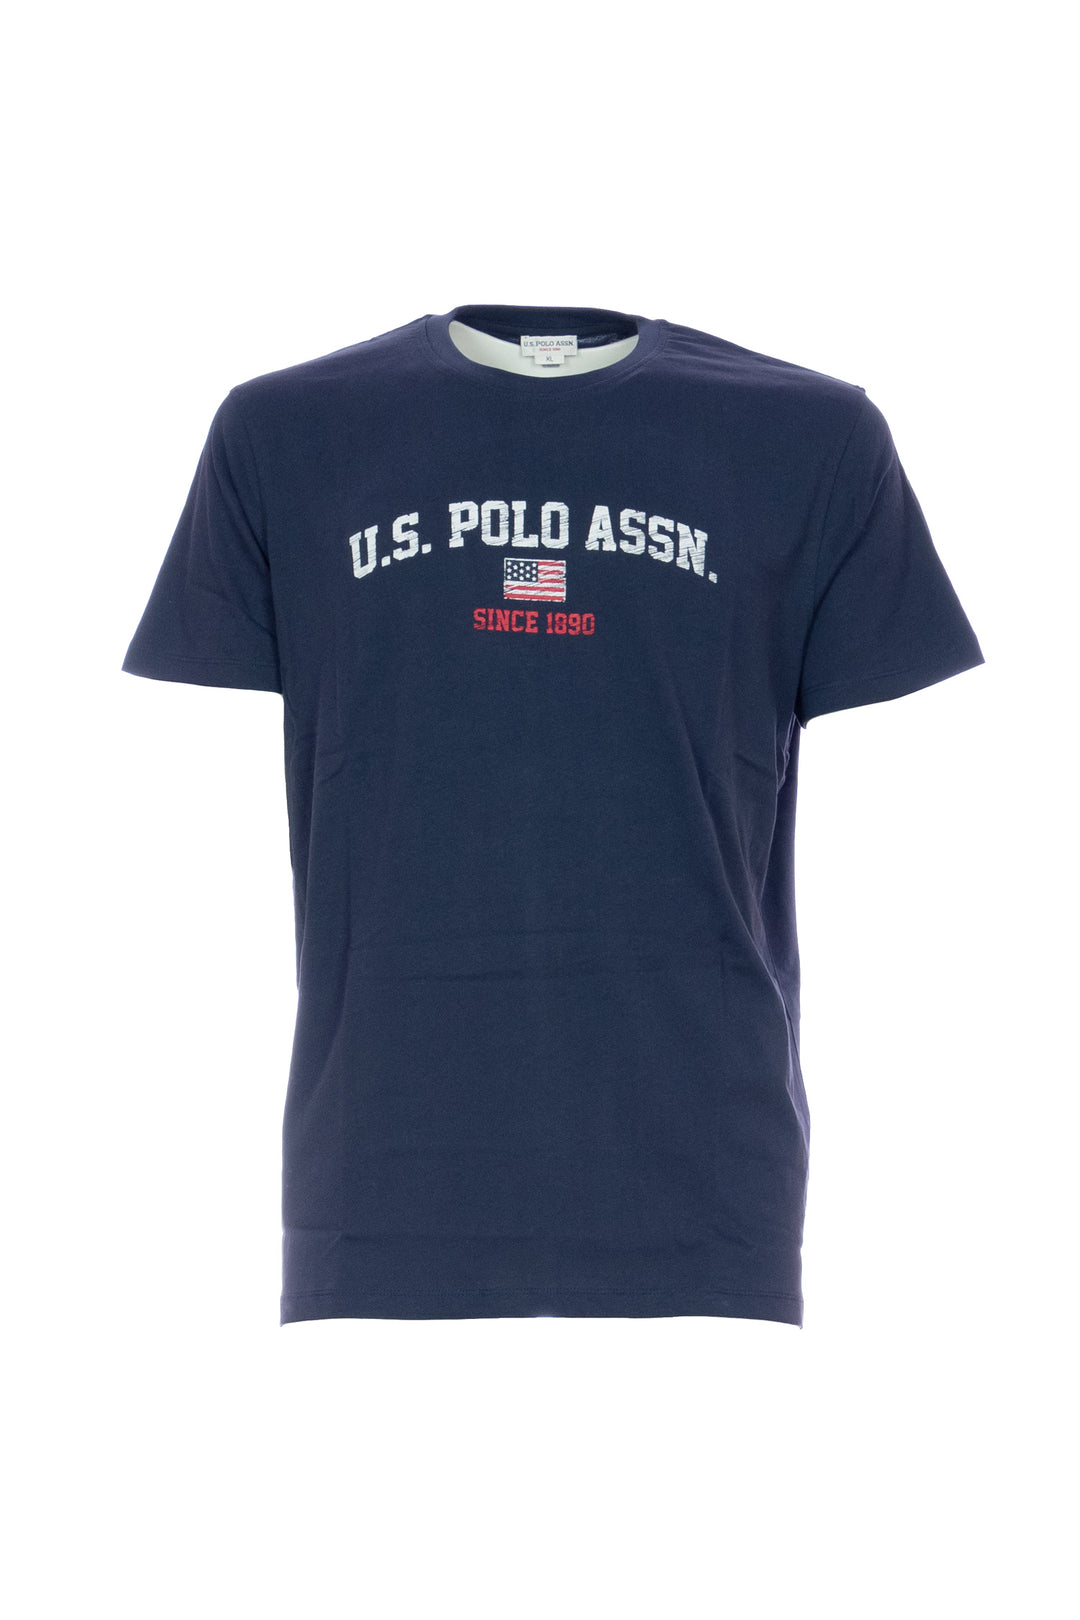 U.S. POLO ASSN. T-shirt blu navy in cotone con stampa U.S. Polo Assn. - Mancinelli 1954